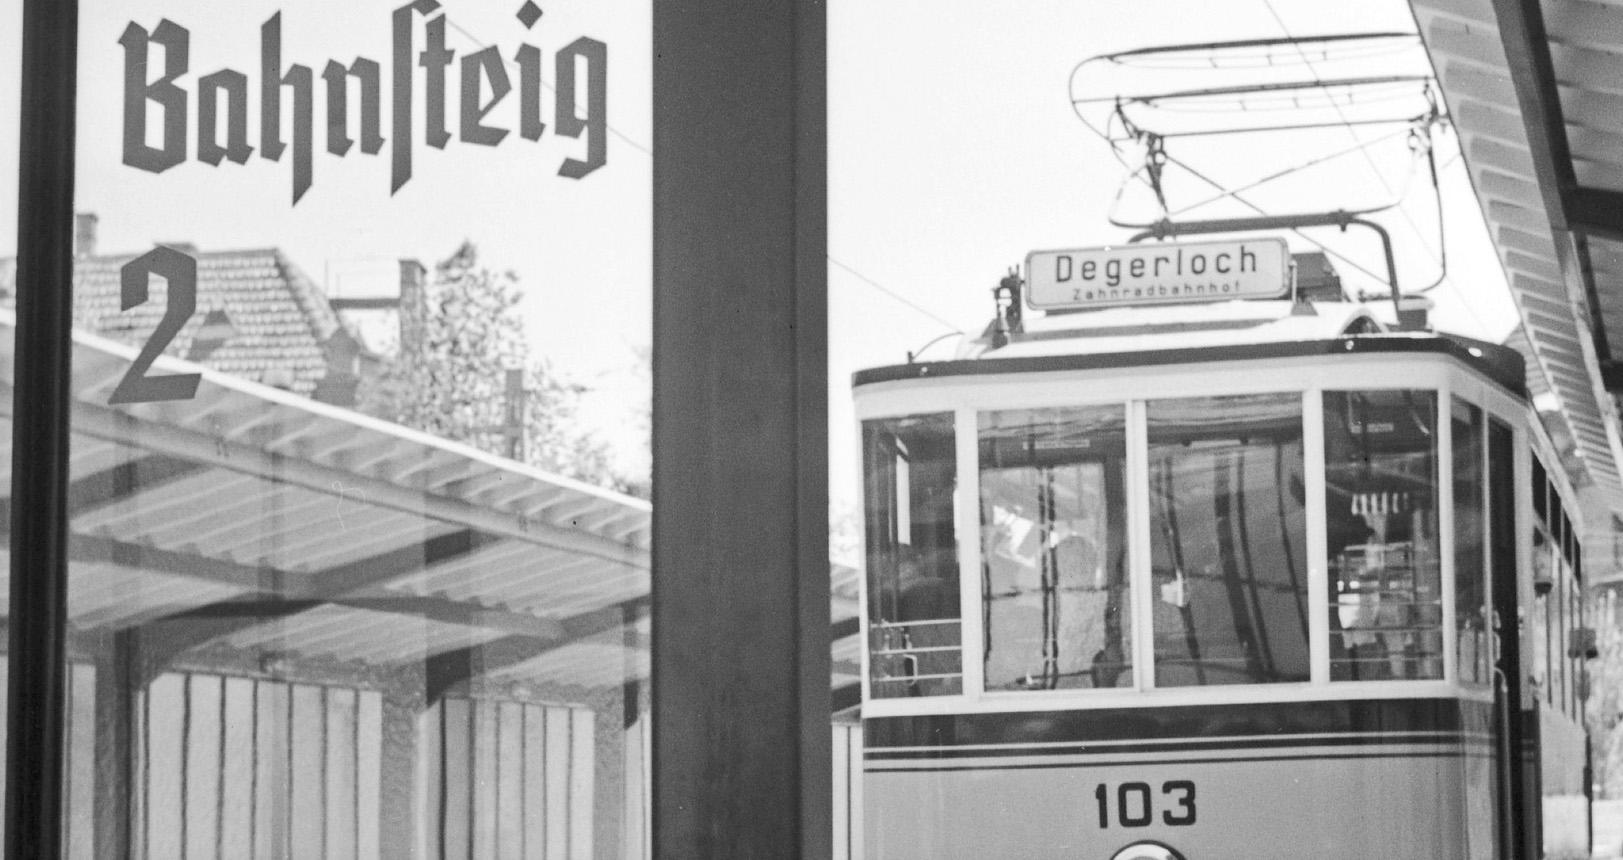 Train to Degerloch waiting at platform, Stuttgart Germany 1935, Printed Later - Photograph by Karl Heinrich Lämmel